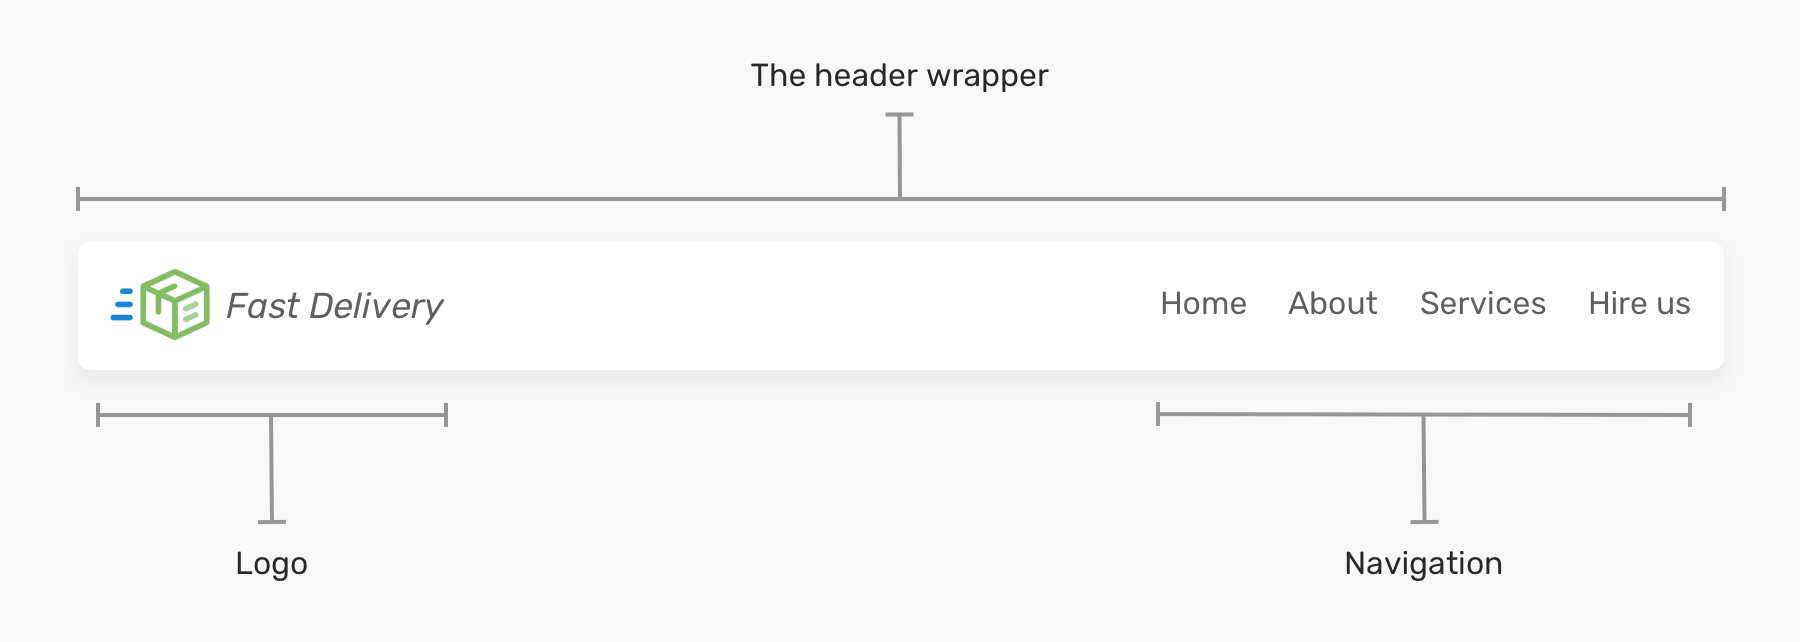 html - flex-wrap causing next line to have too big of a gap